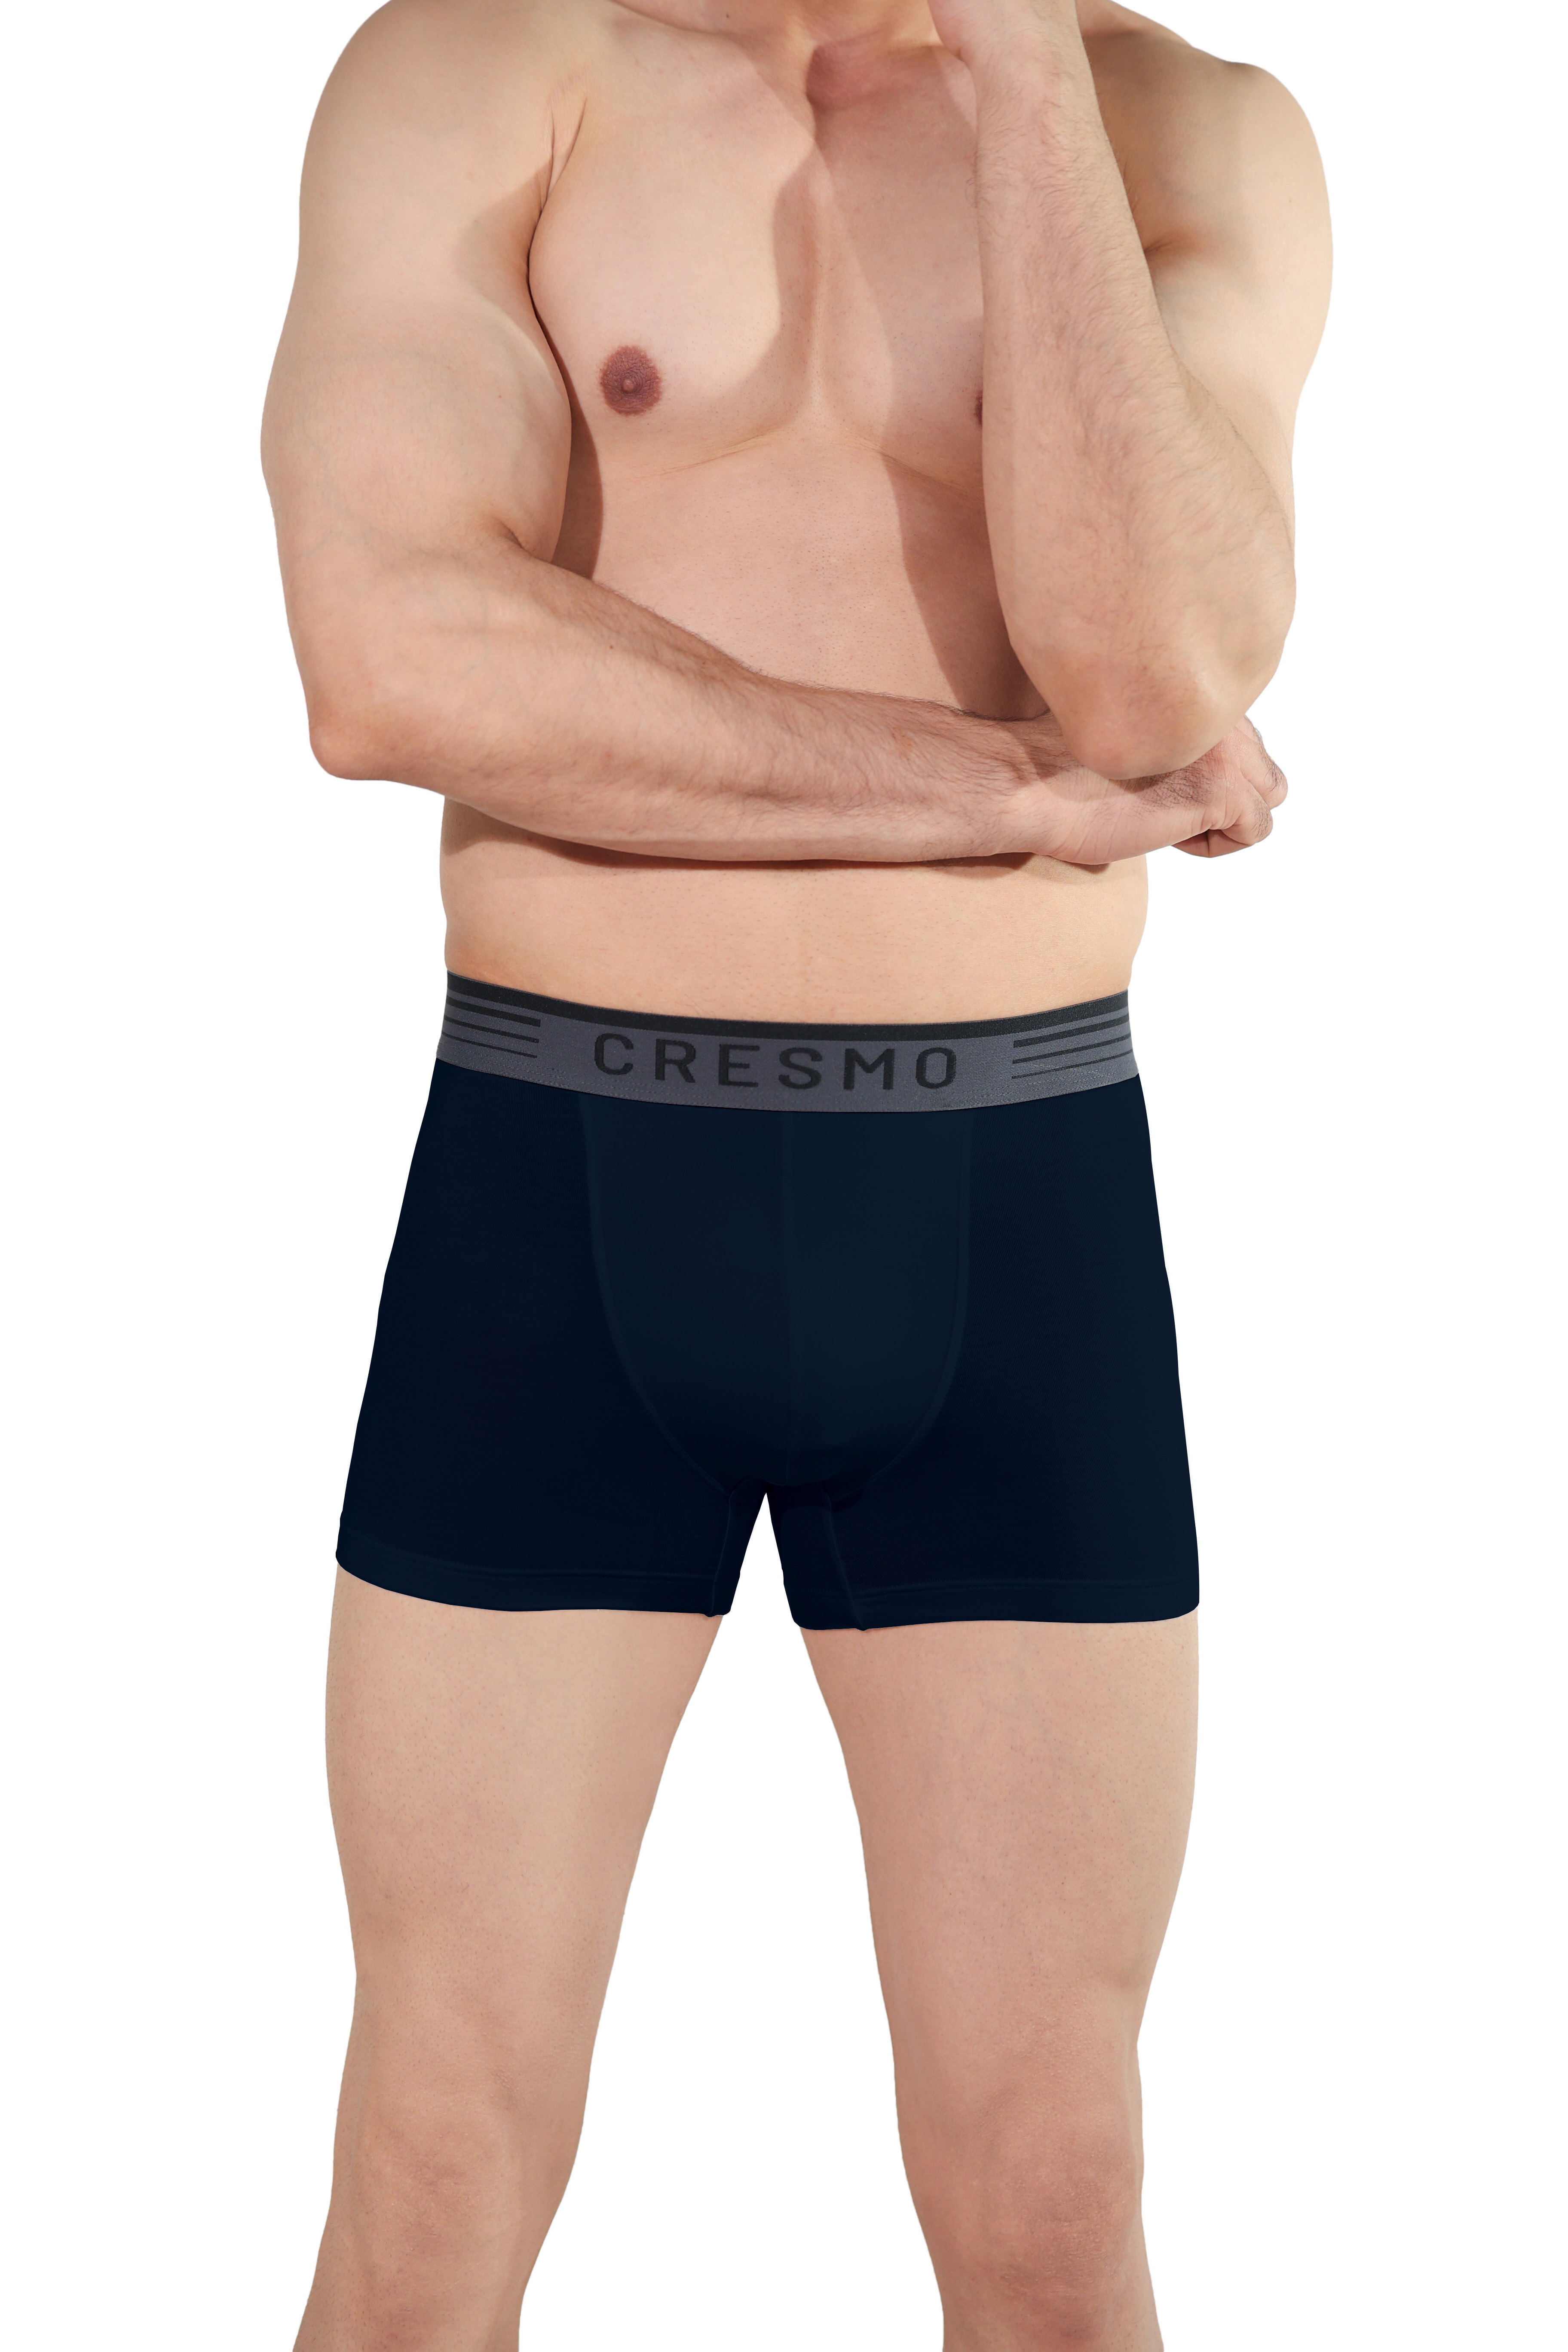 CRESMO | CRESMO Men's Microbial Micro Modal Underwear Breathable Ultra Soft Trunk